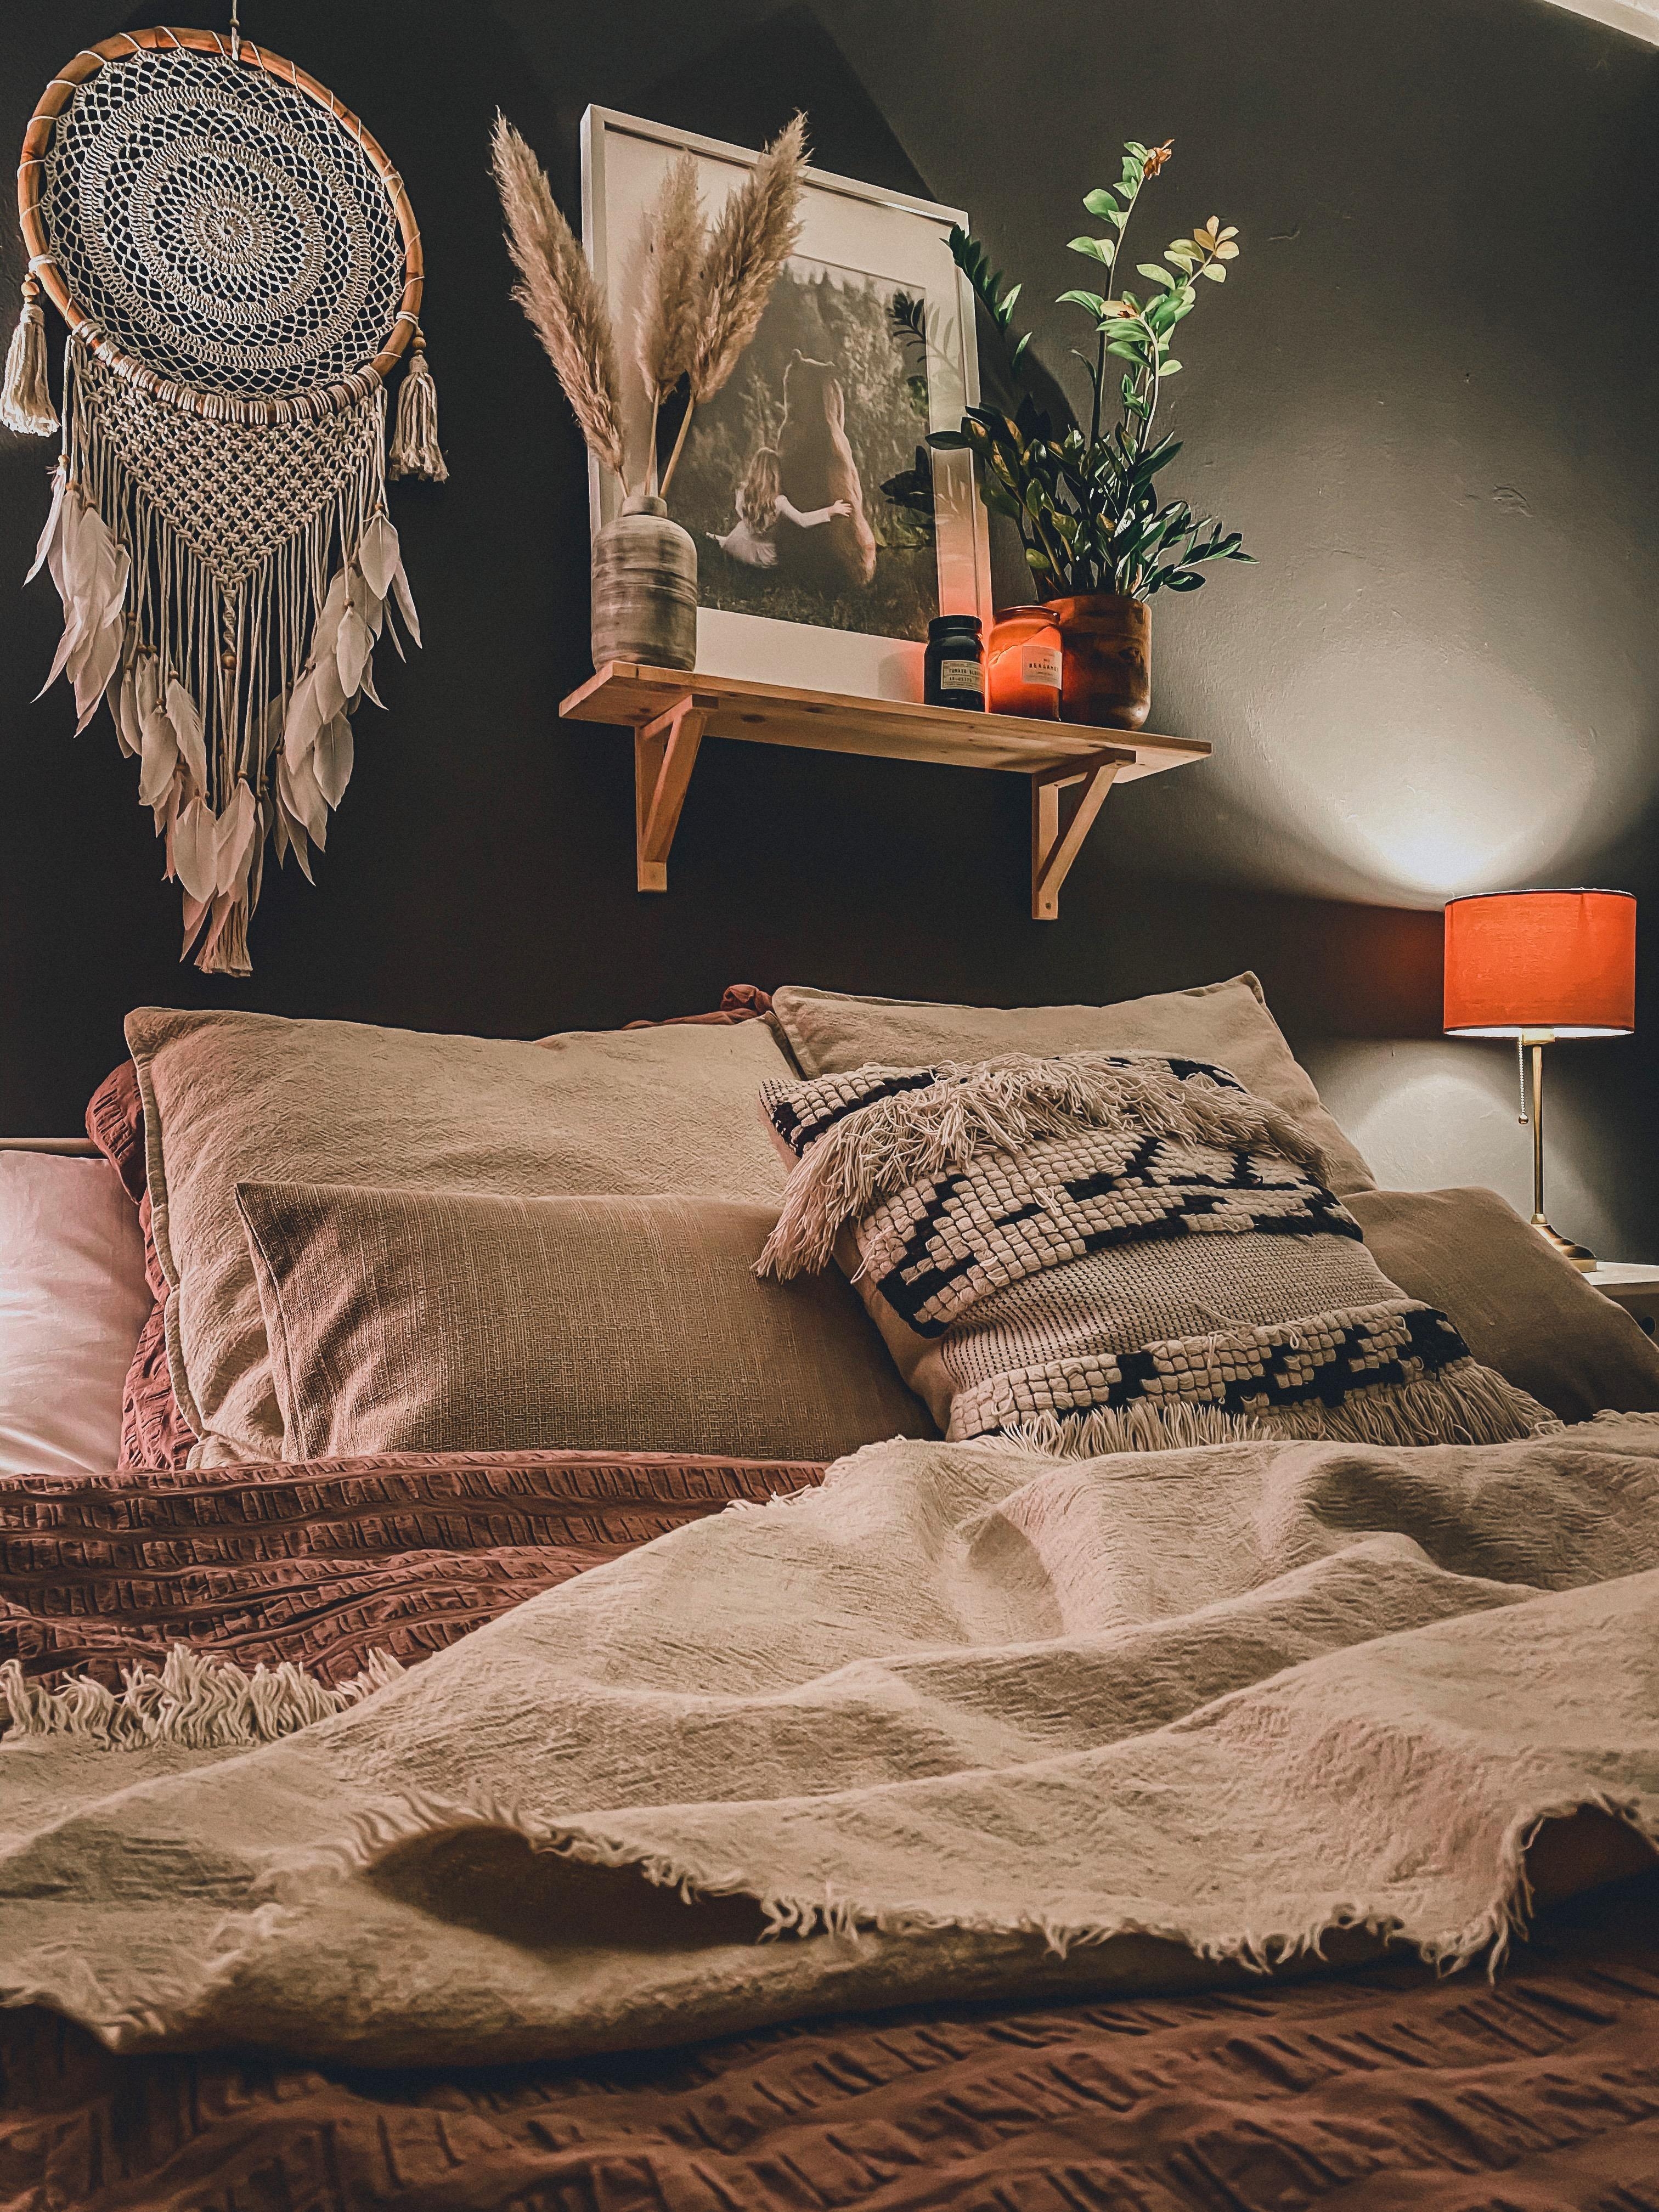 good night #bedtime #bedroom #schlafzimmer #interior